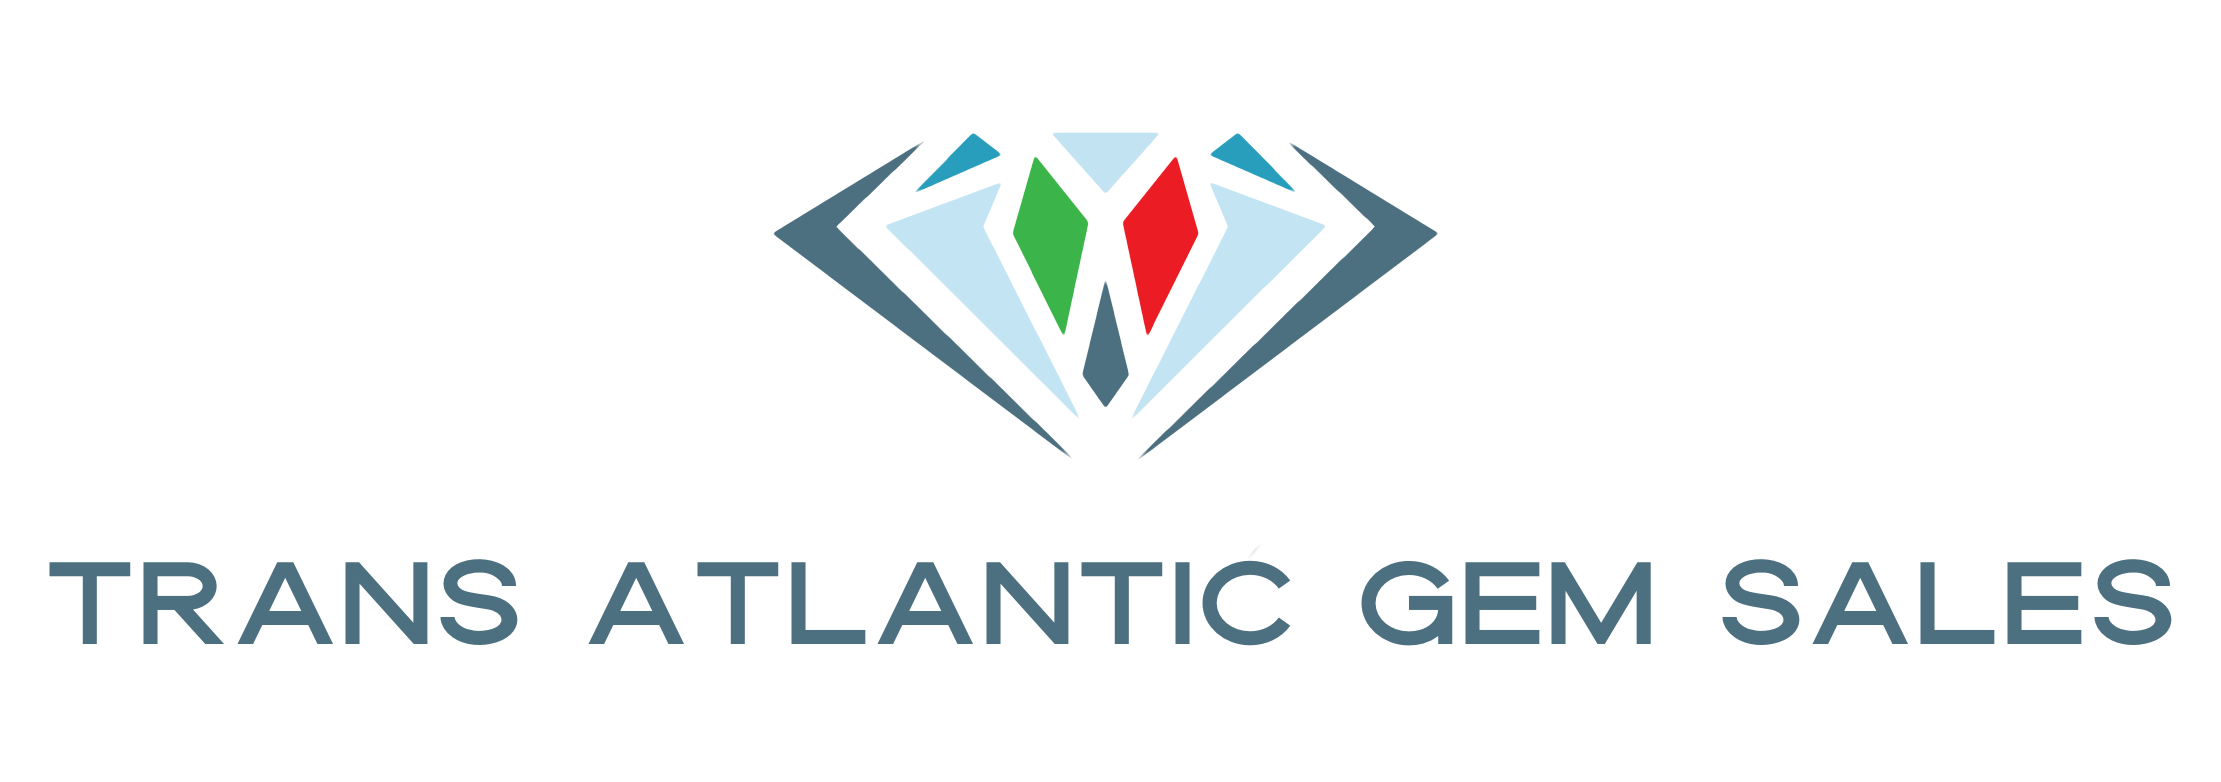 Trans Atlantic Gem Sales